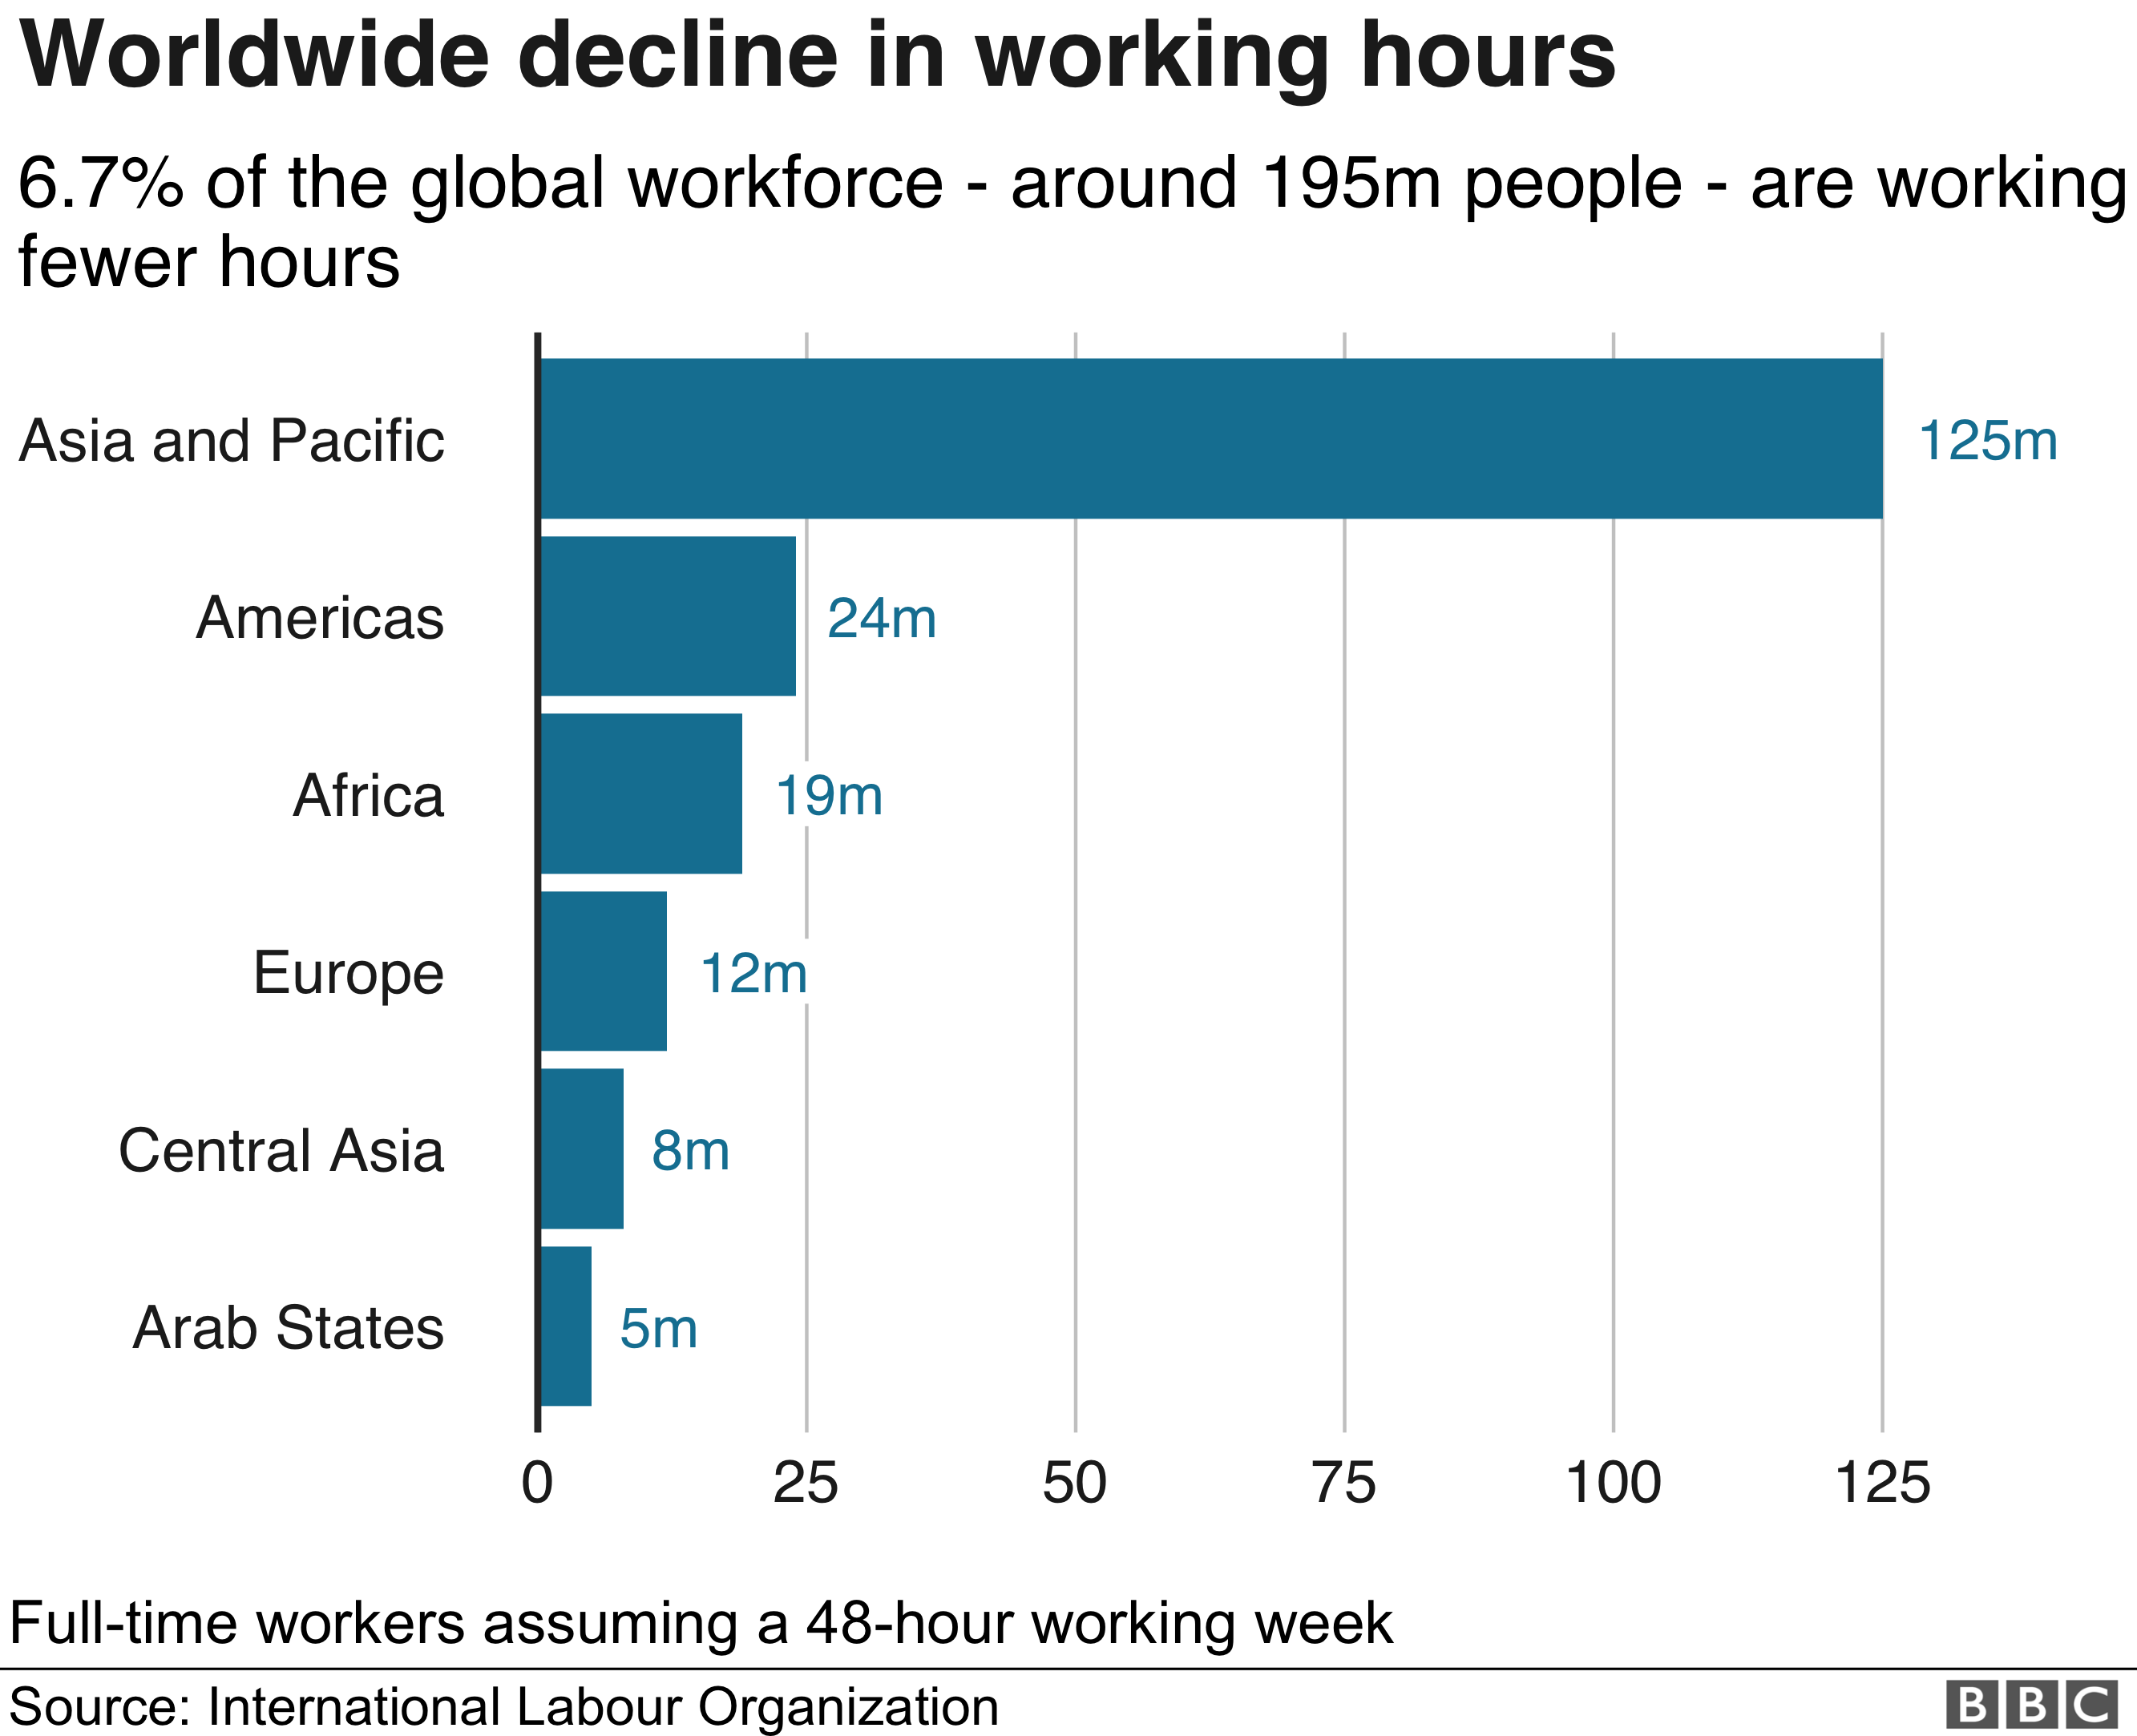 Worldwide decline in working hours bar chart